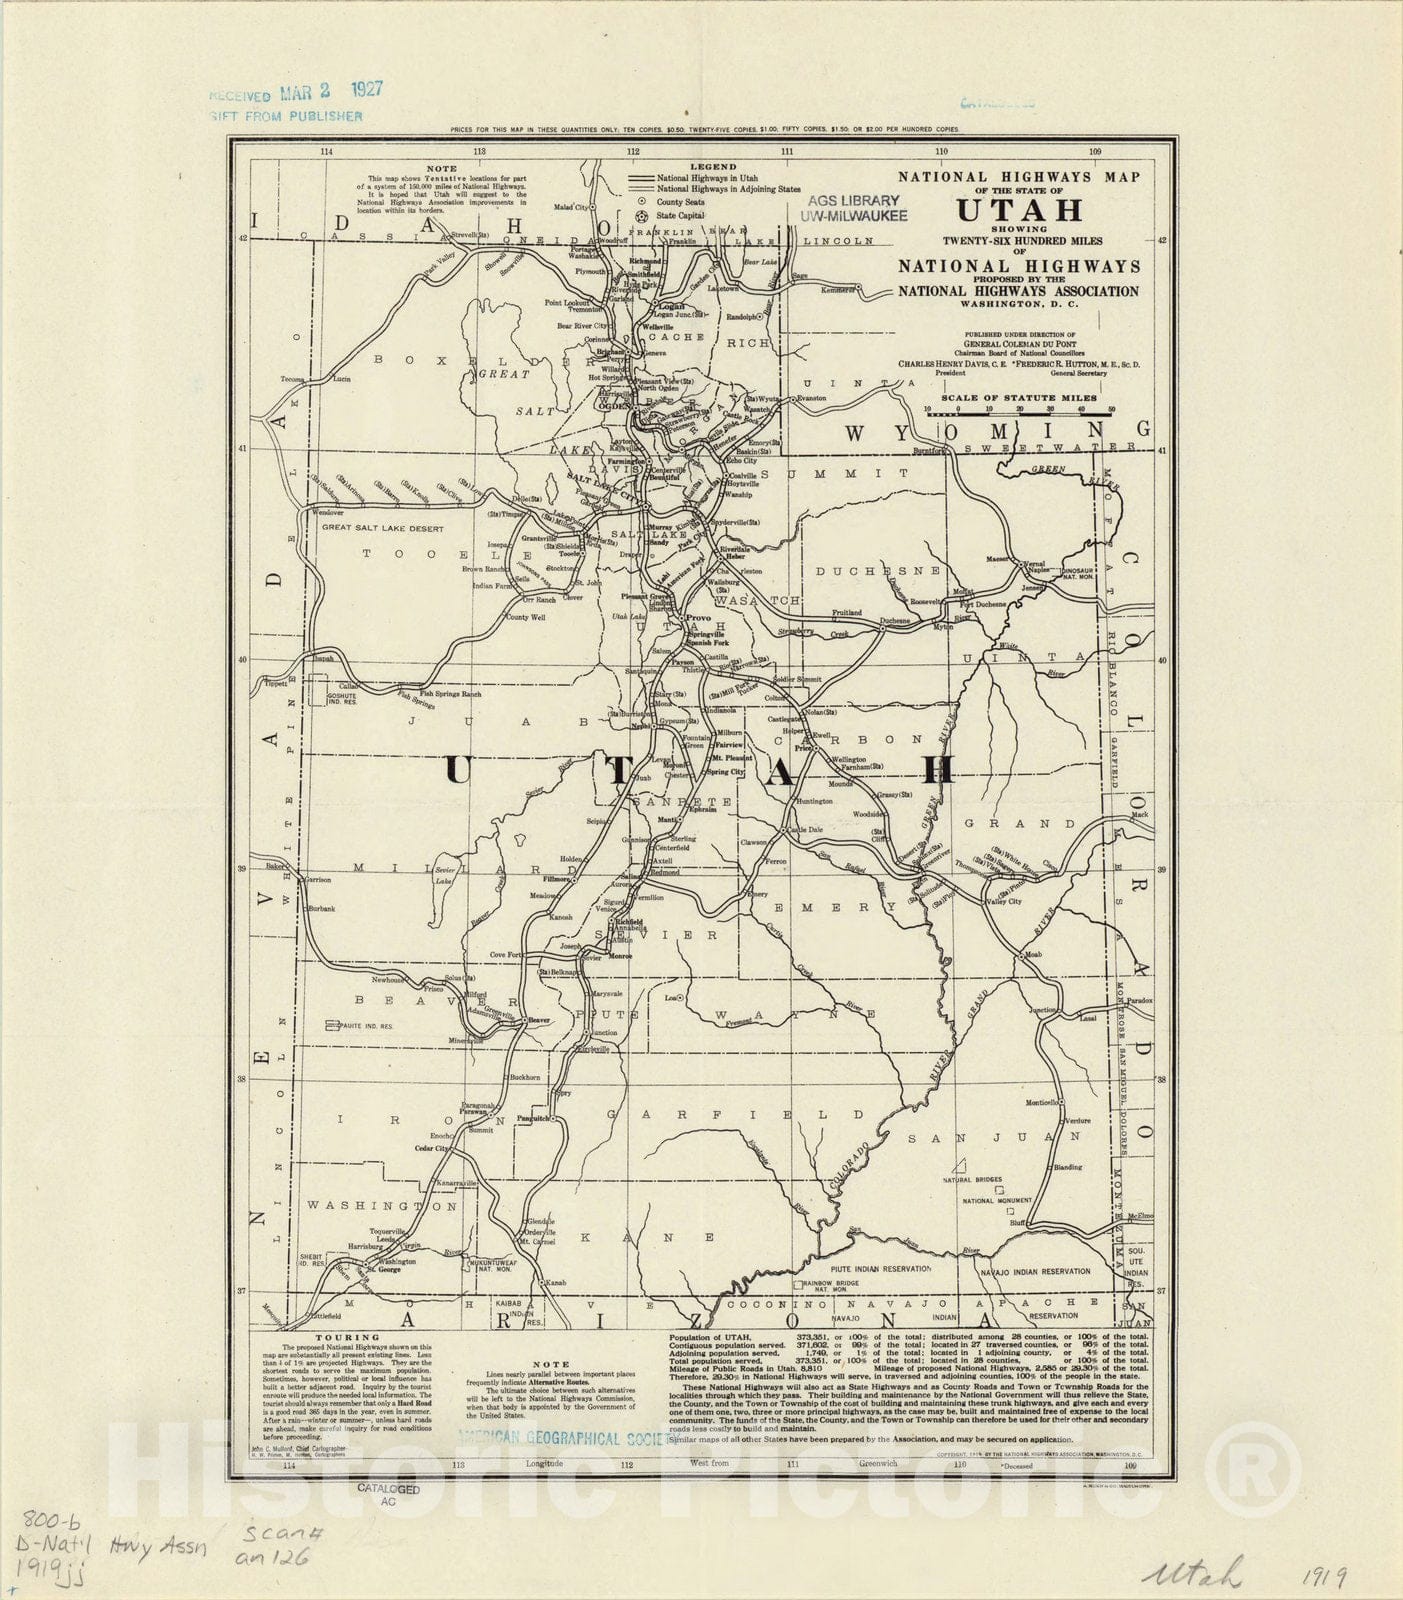 Map : Utah 1919, National highways map of the state of Utah : showing twenty-six hundred miles of national highways